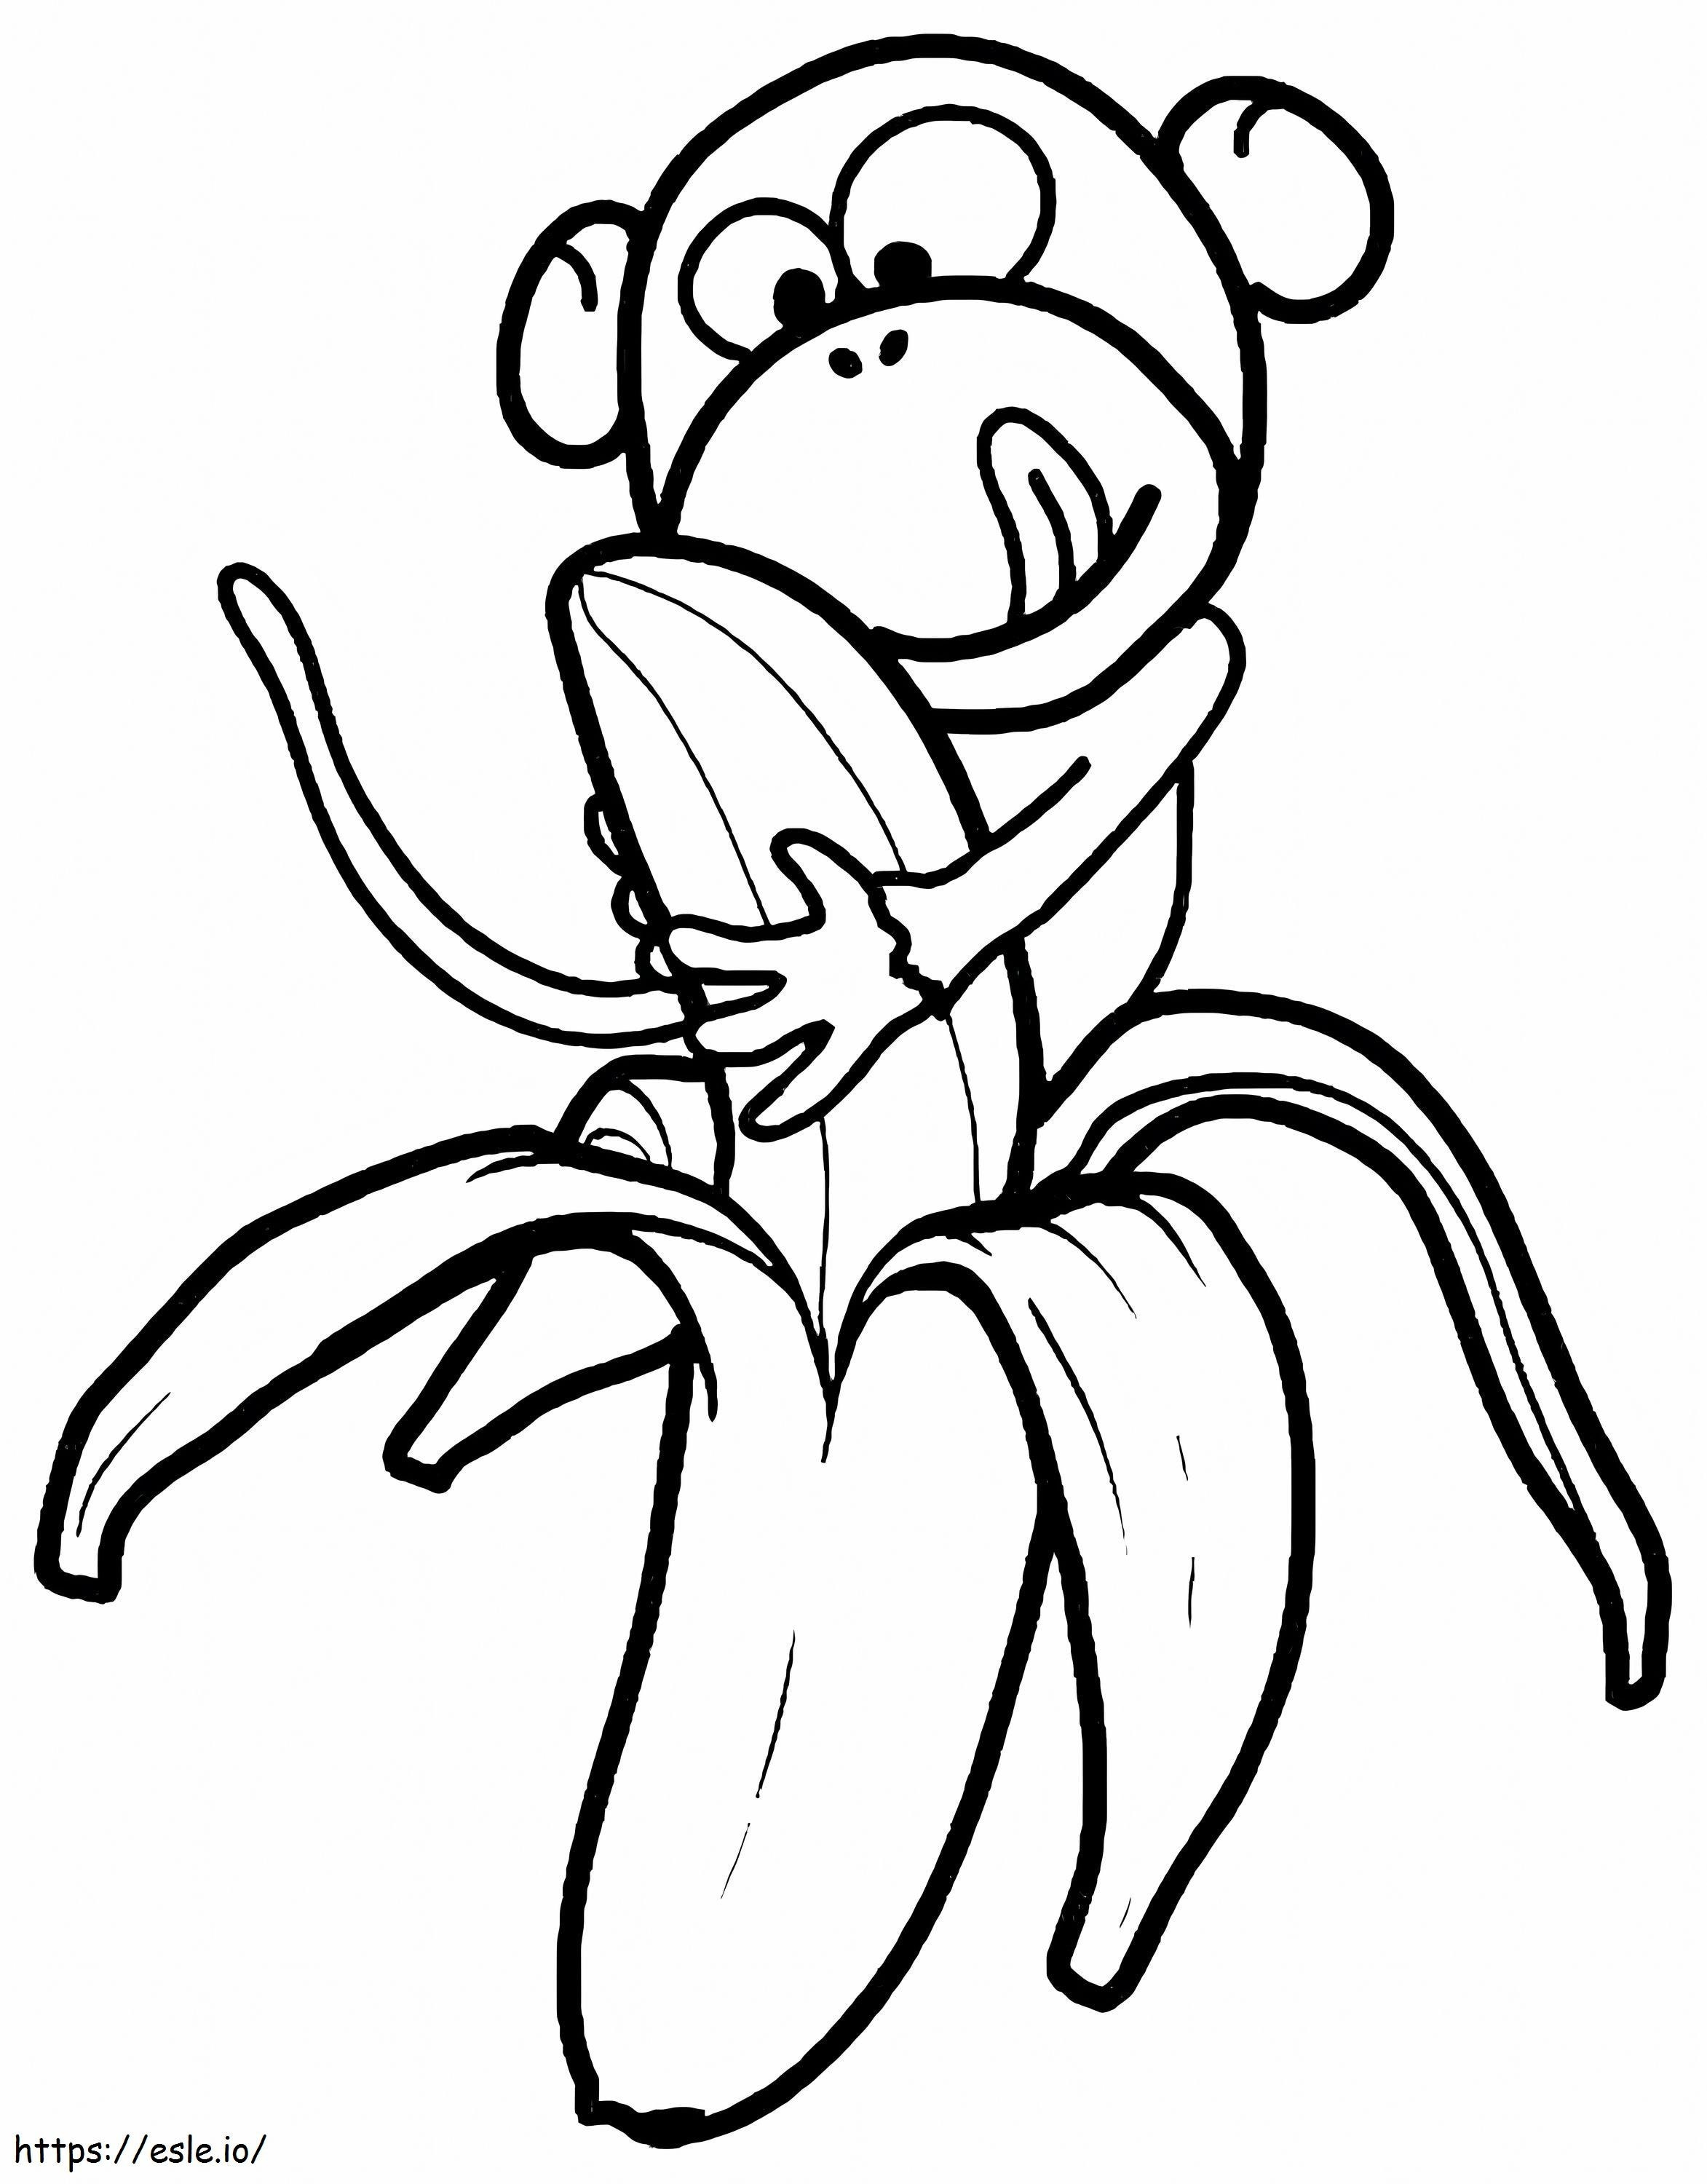 Easy Monkey Eating Banana coloring page